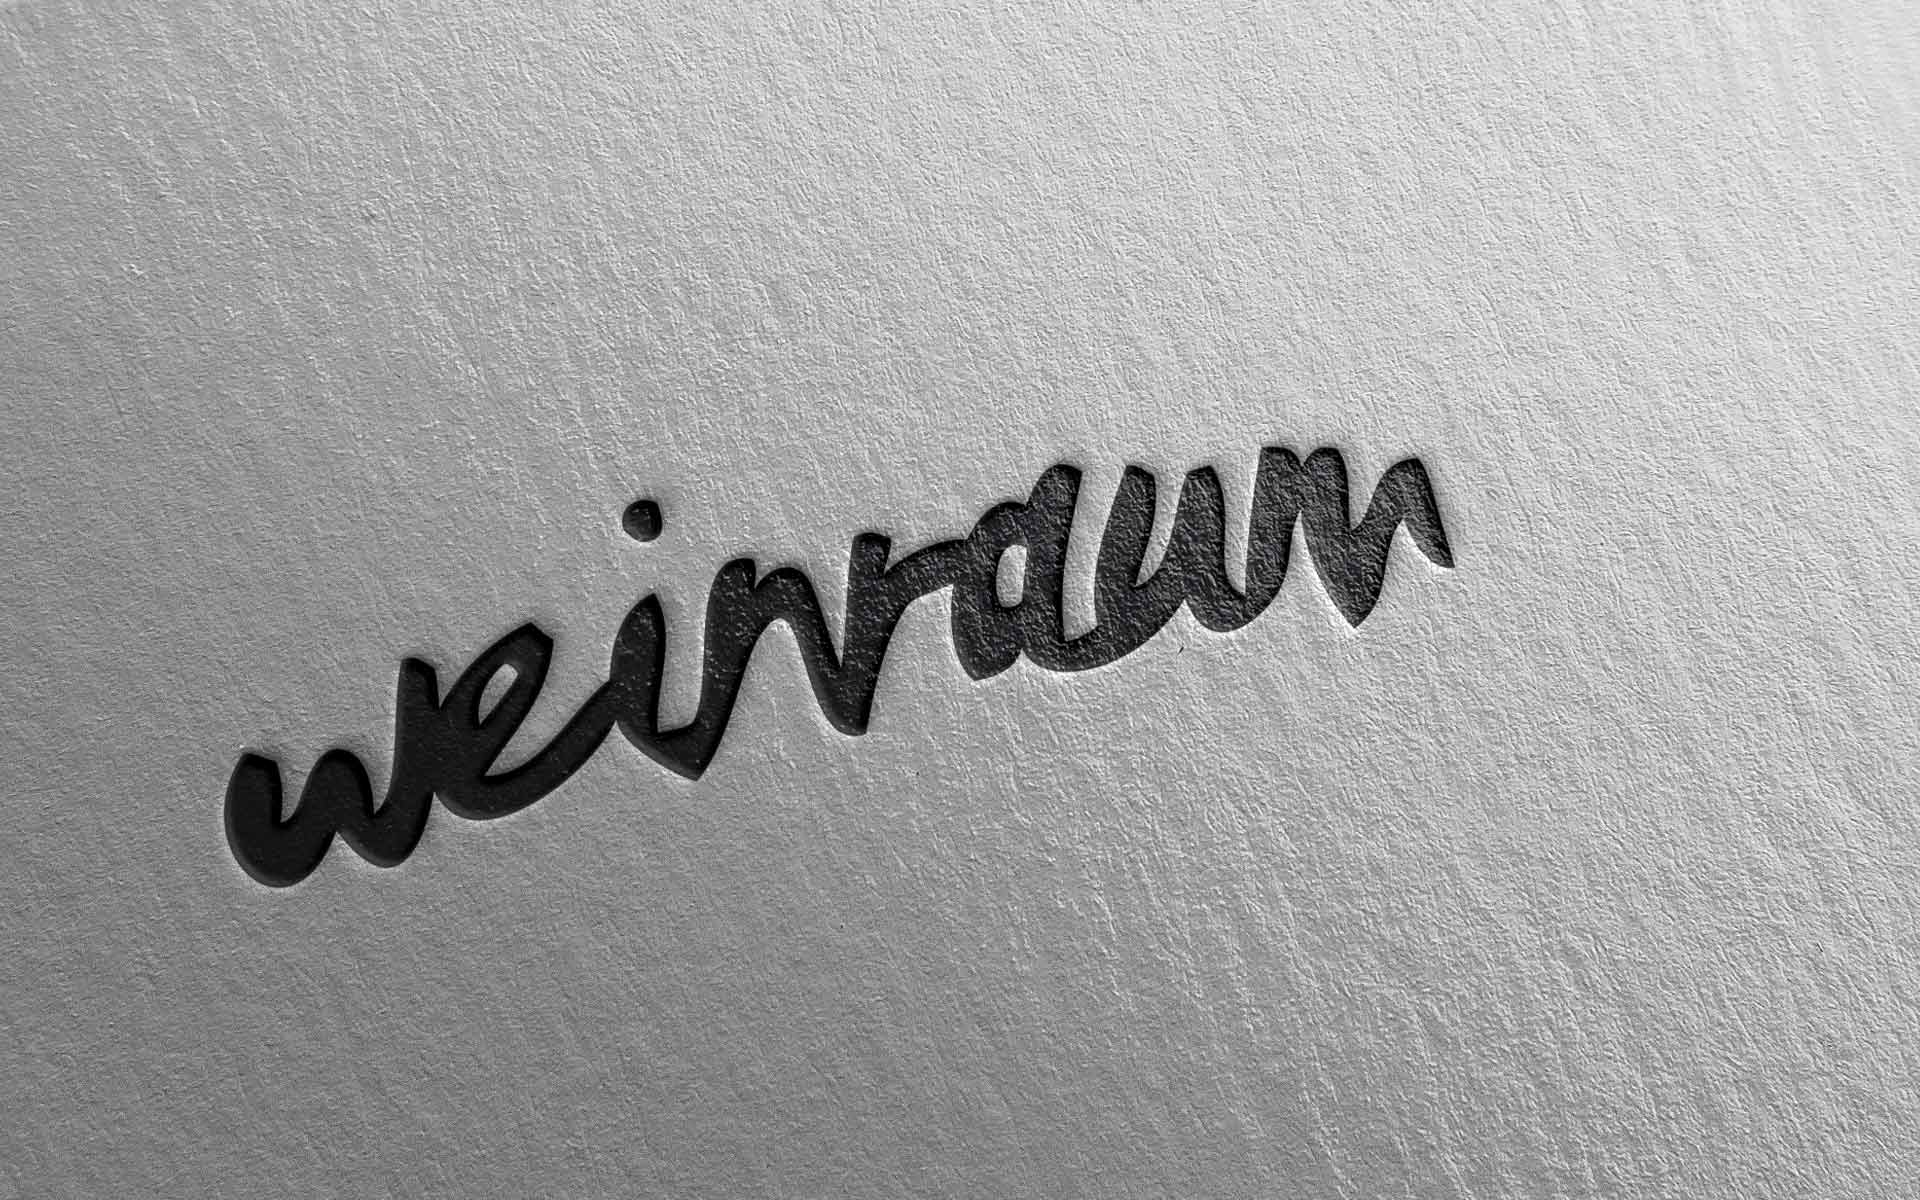 Weinraum Corporate Design, Logotype, letterpress